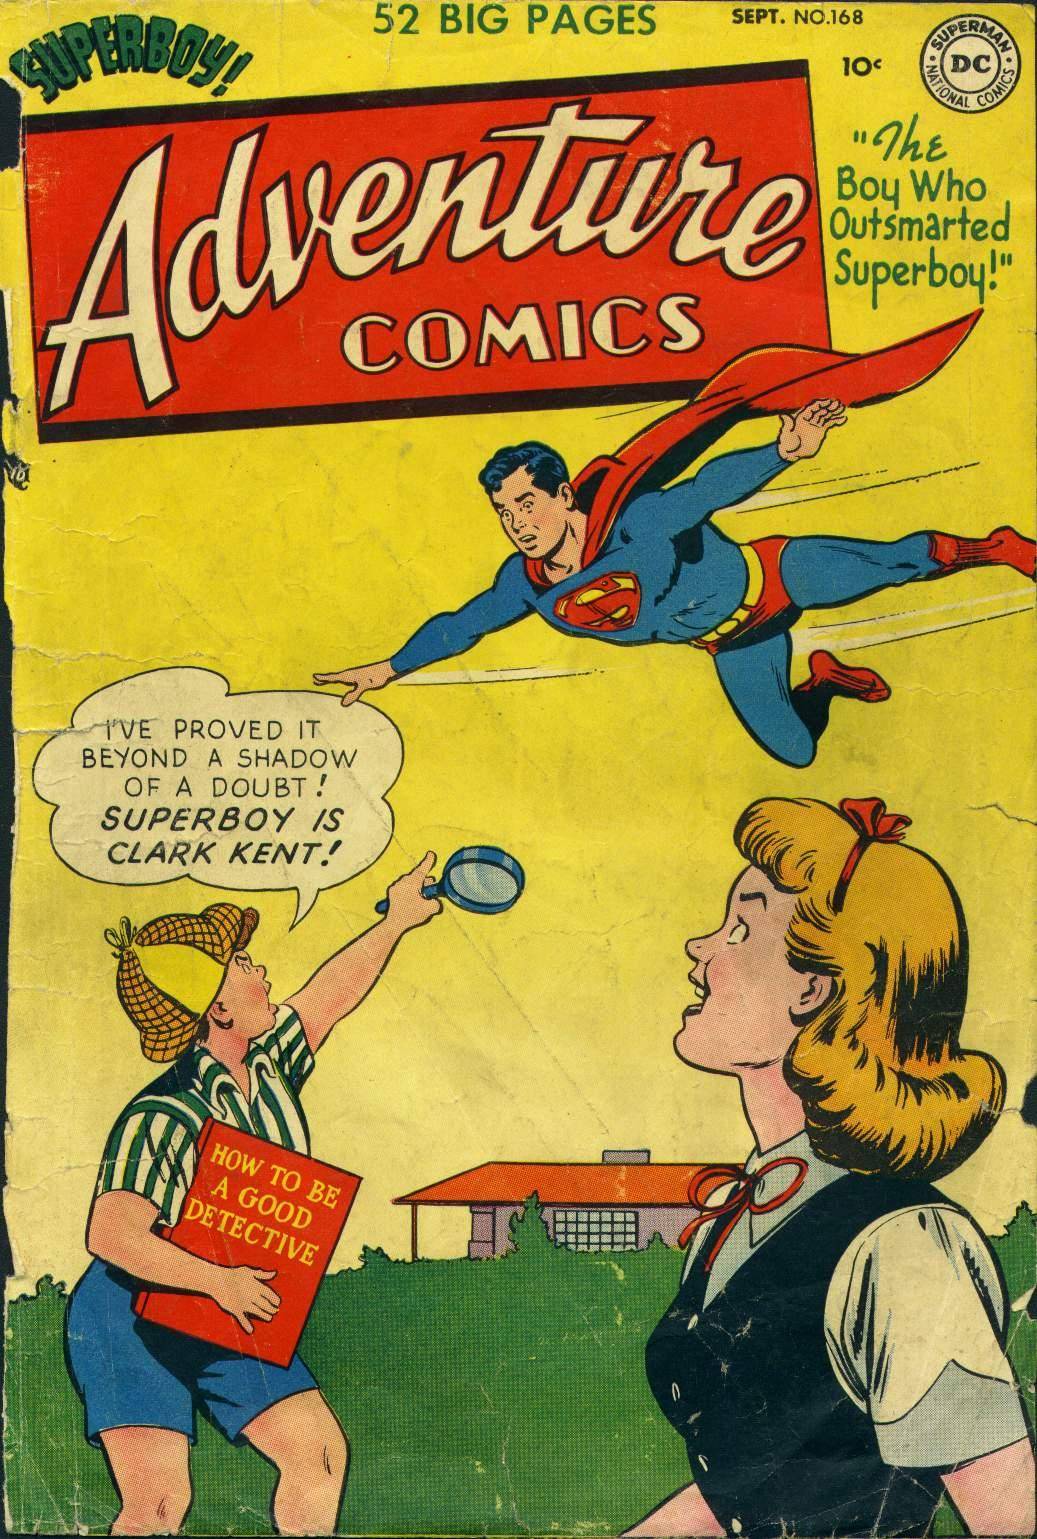 Adventure Comics 1951-09 168 missing CF